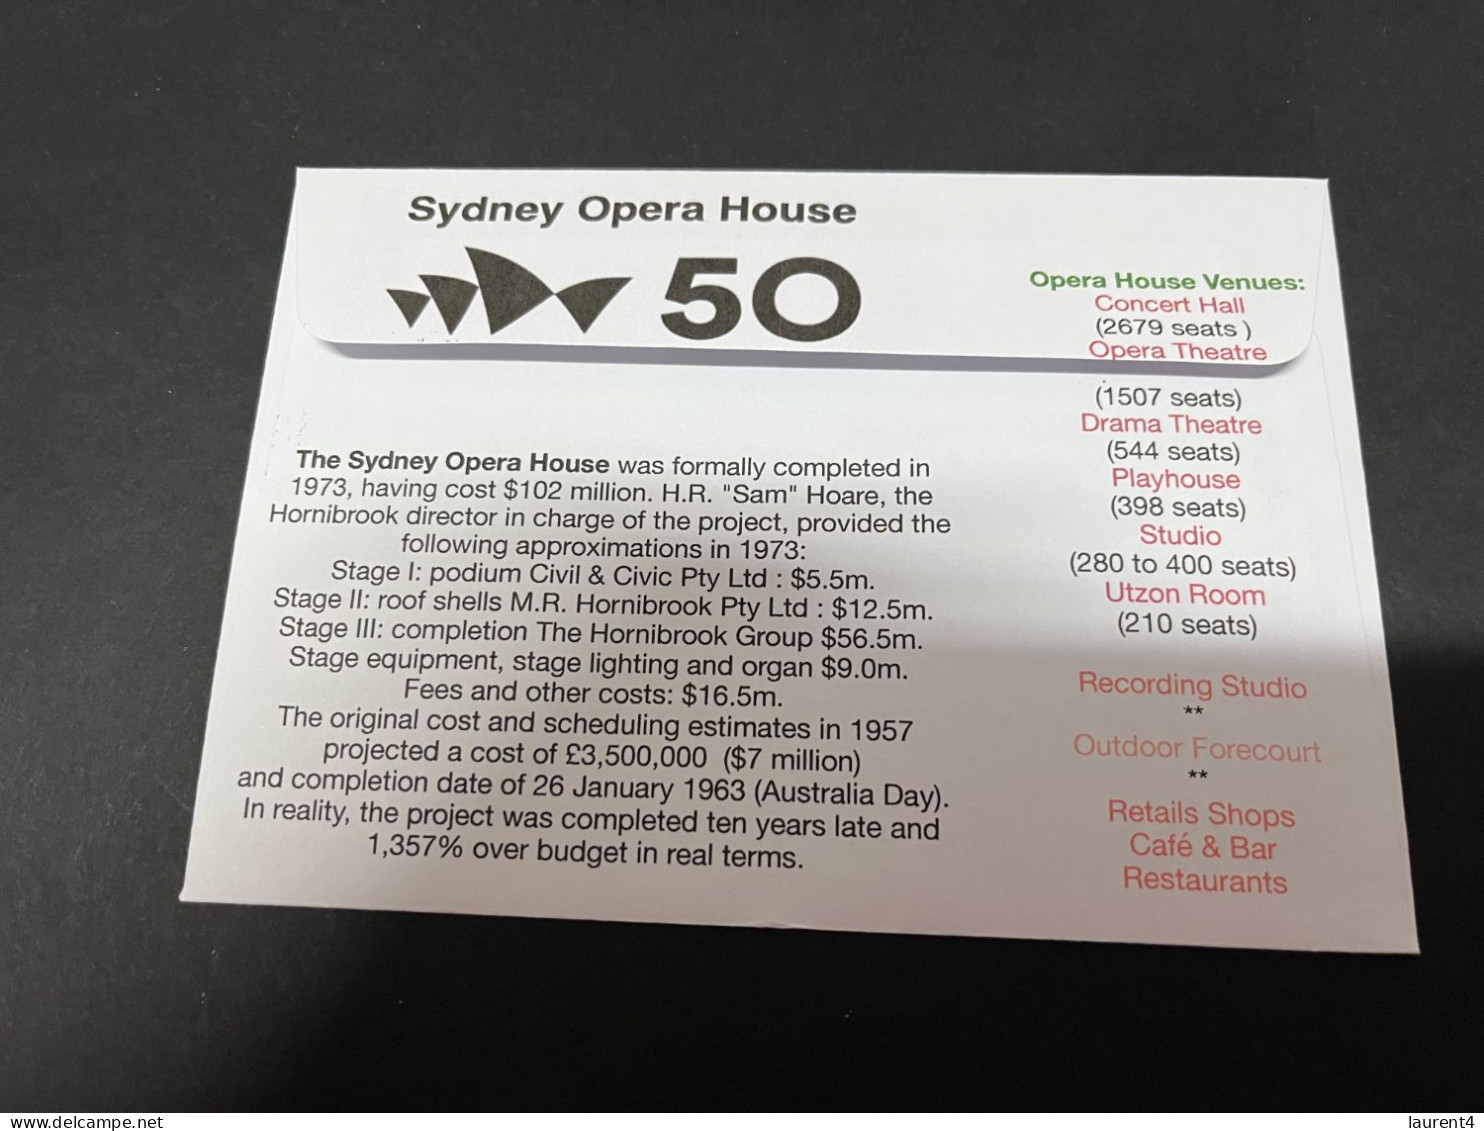 6-10-2023 (3 U 27) Sydney Opera House Celebrate 50th Anniversary (20-10-2023) 2 Covers - Brieven En Documenten